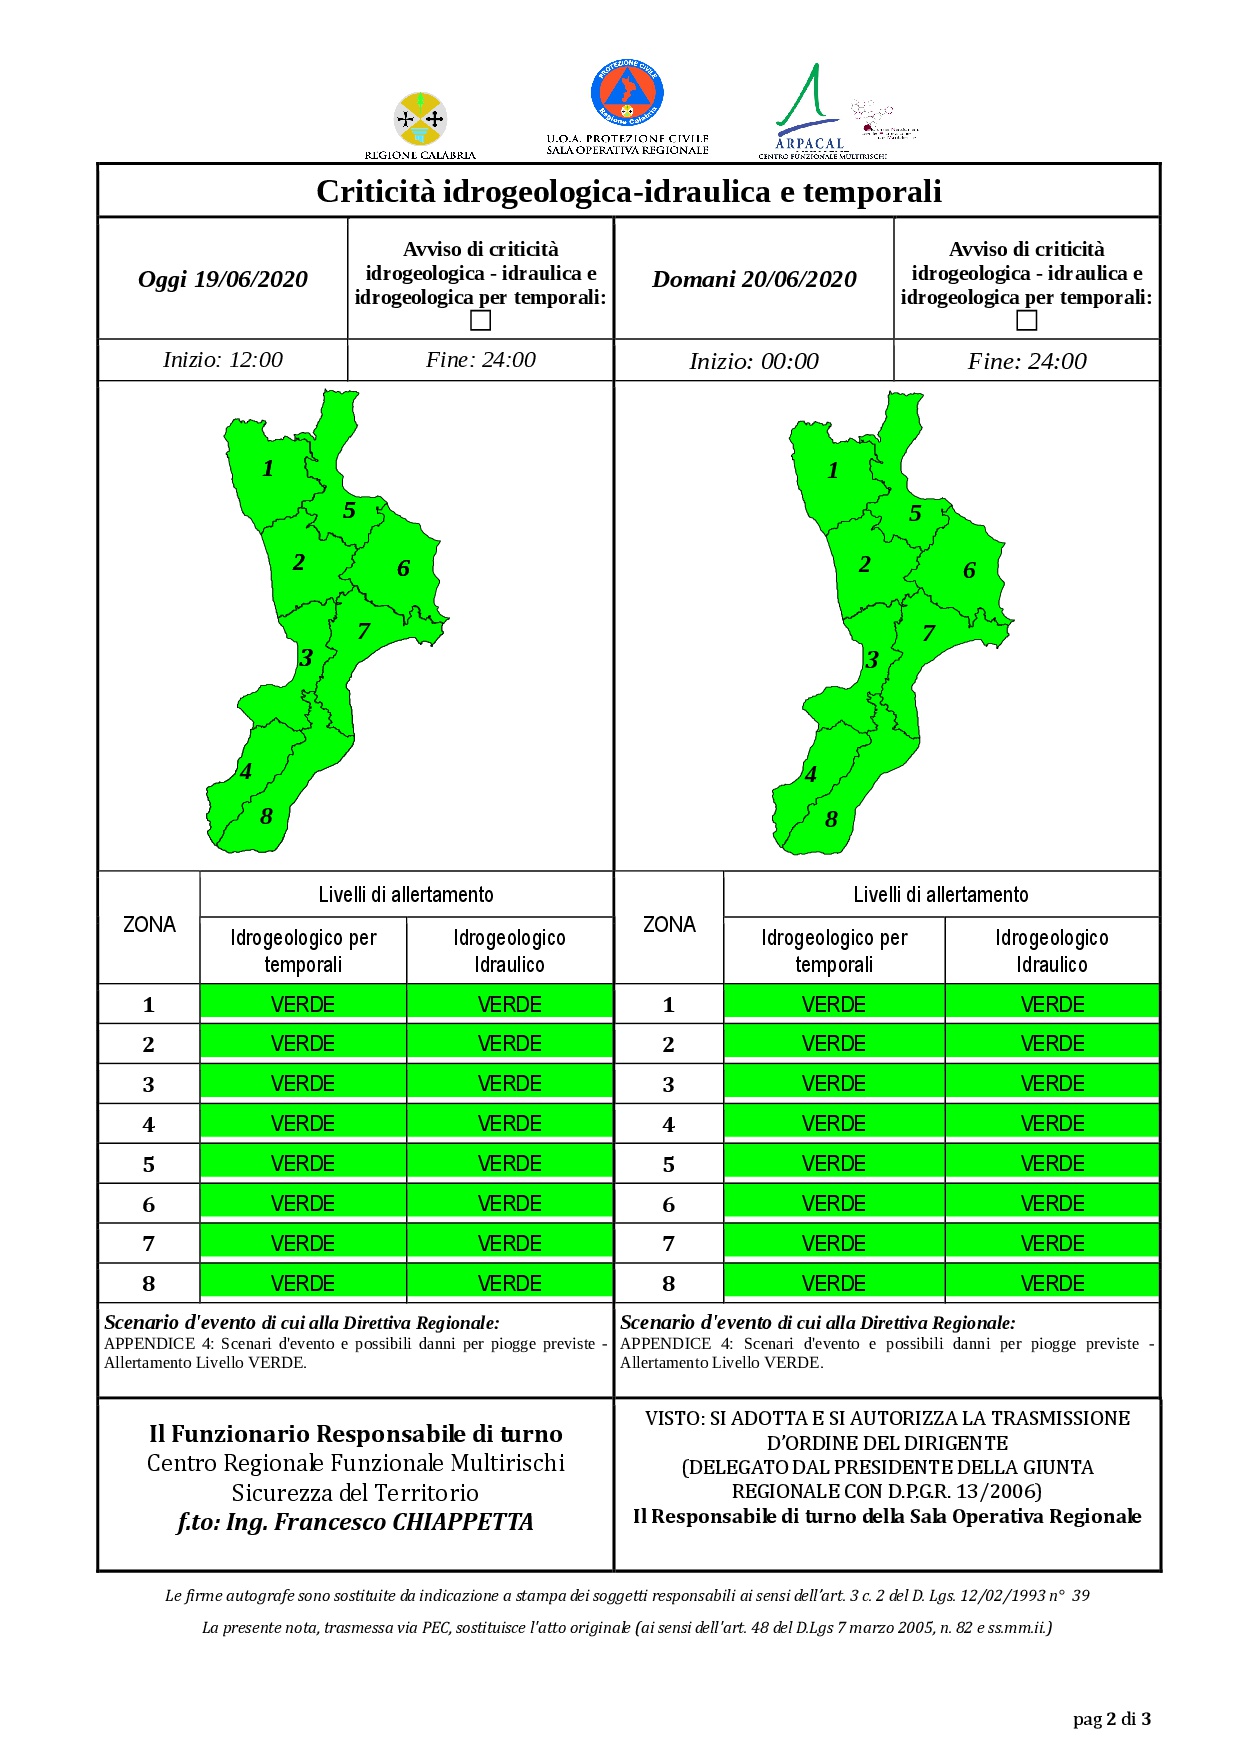 Criticità idrogeologica-idraulica e temporali in Calabria 19-06-2020